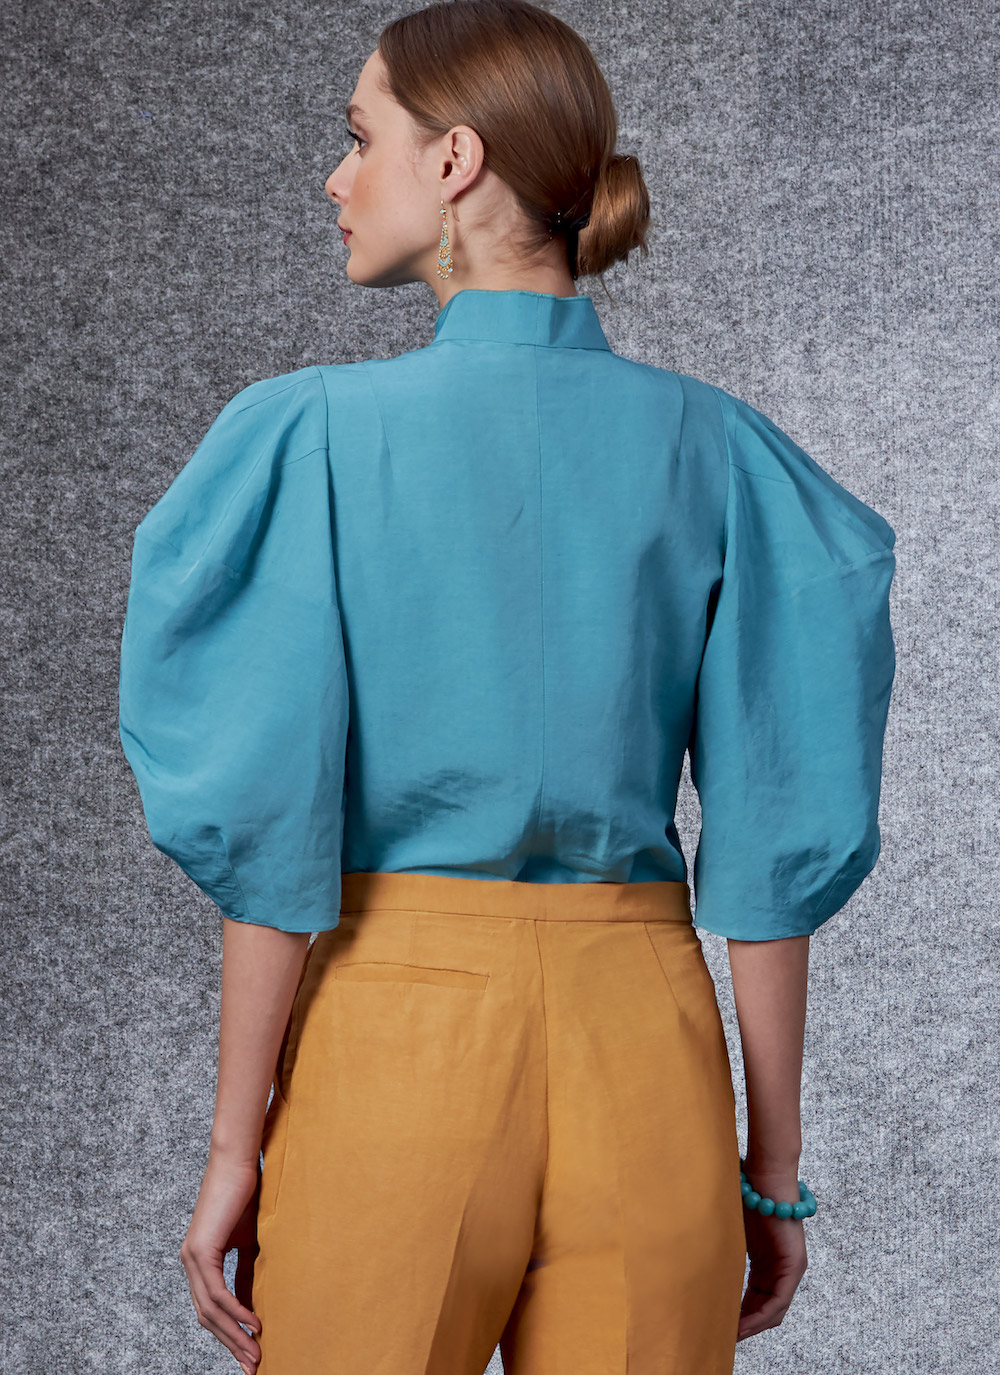 Vogue® Patterns Papierschnittmuster Damen Bluse & Hose (V1704)